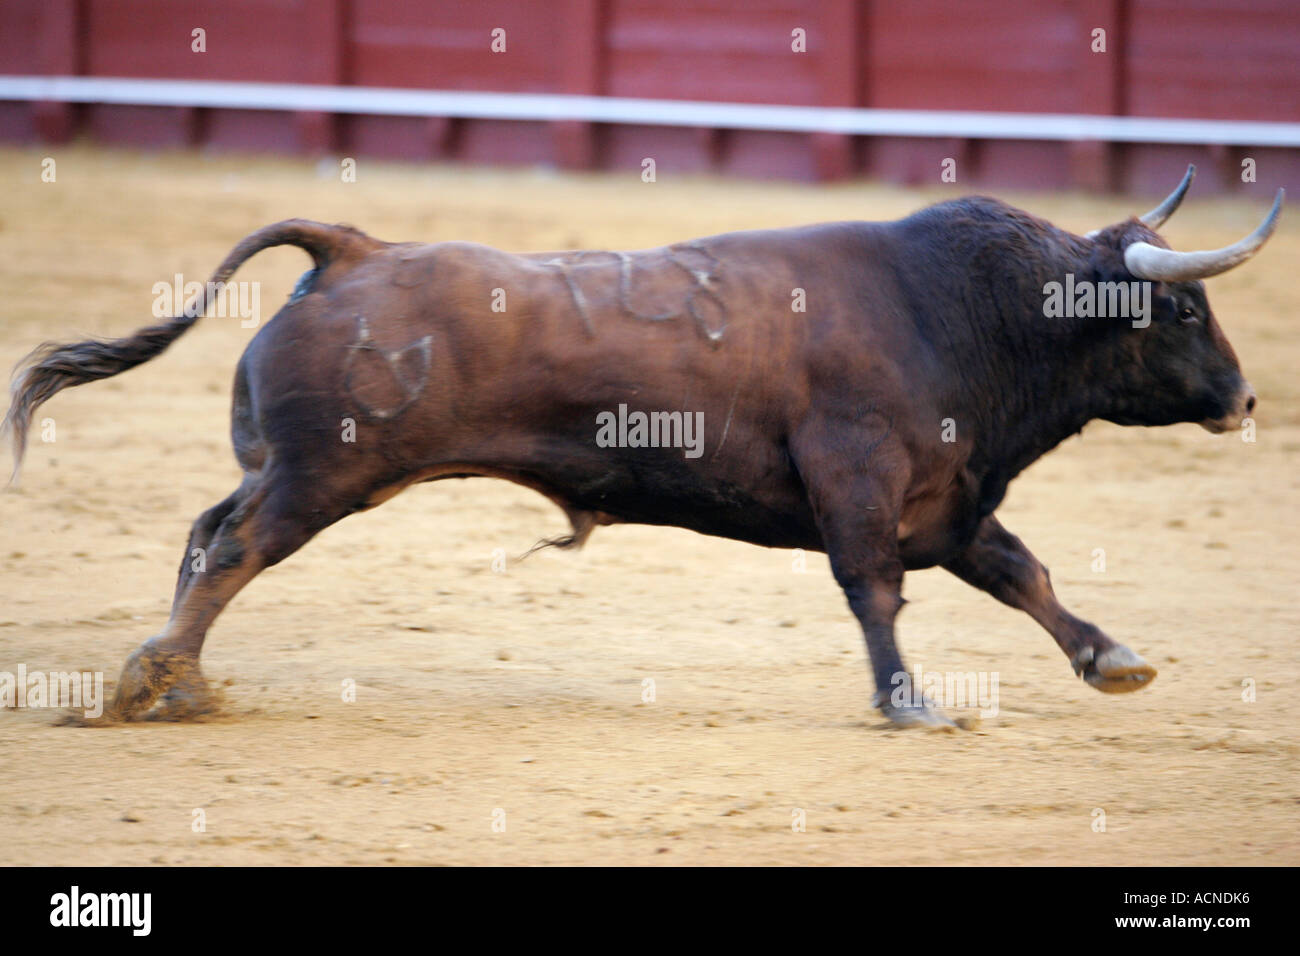 the superb figure of a fierce bull at Maestranza bullring at start of a bullfight Stock Photo